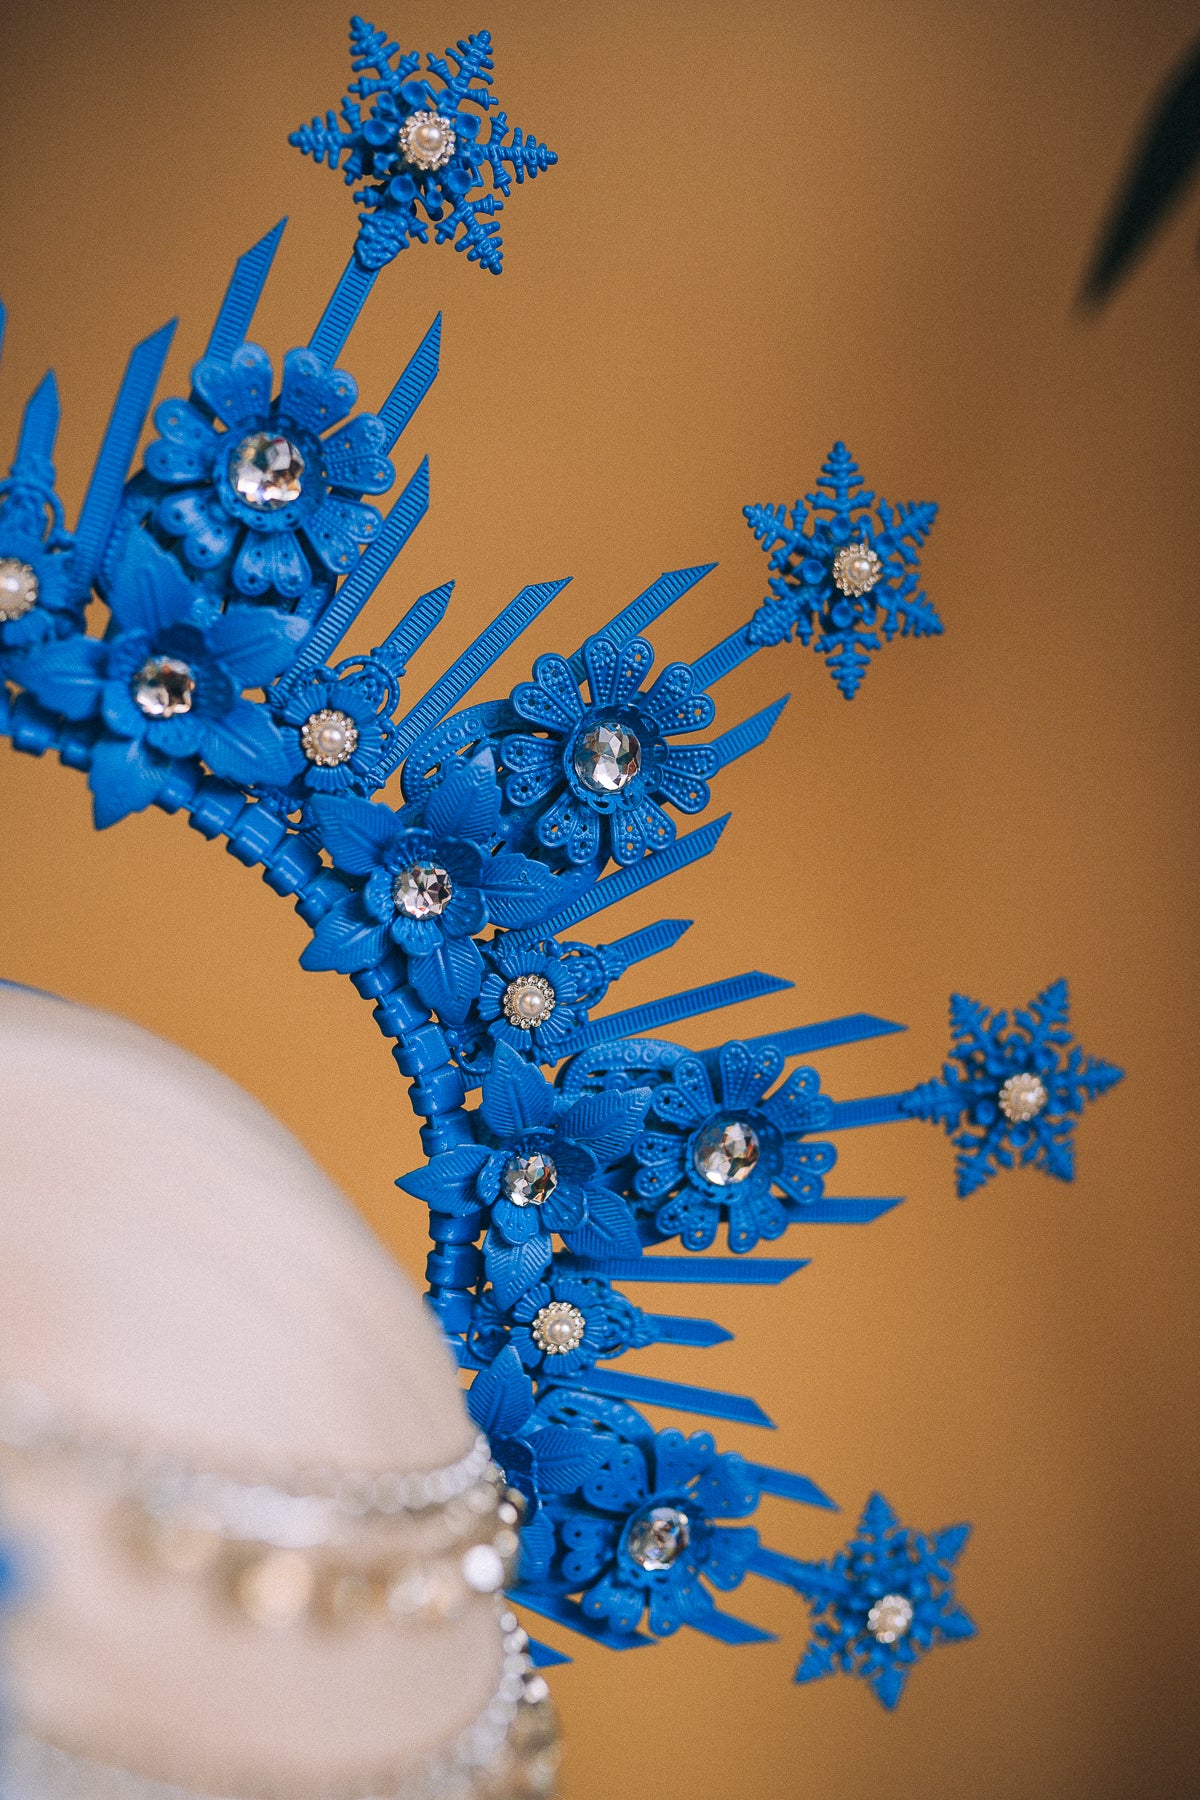 Load image into Gallery viewer, UV Active Blue Snowflake Halo Crown Winter Tiara
